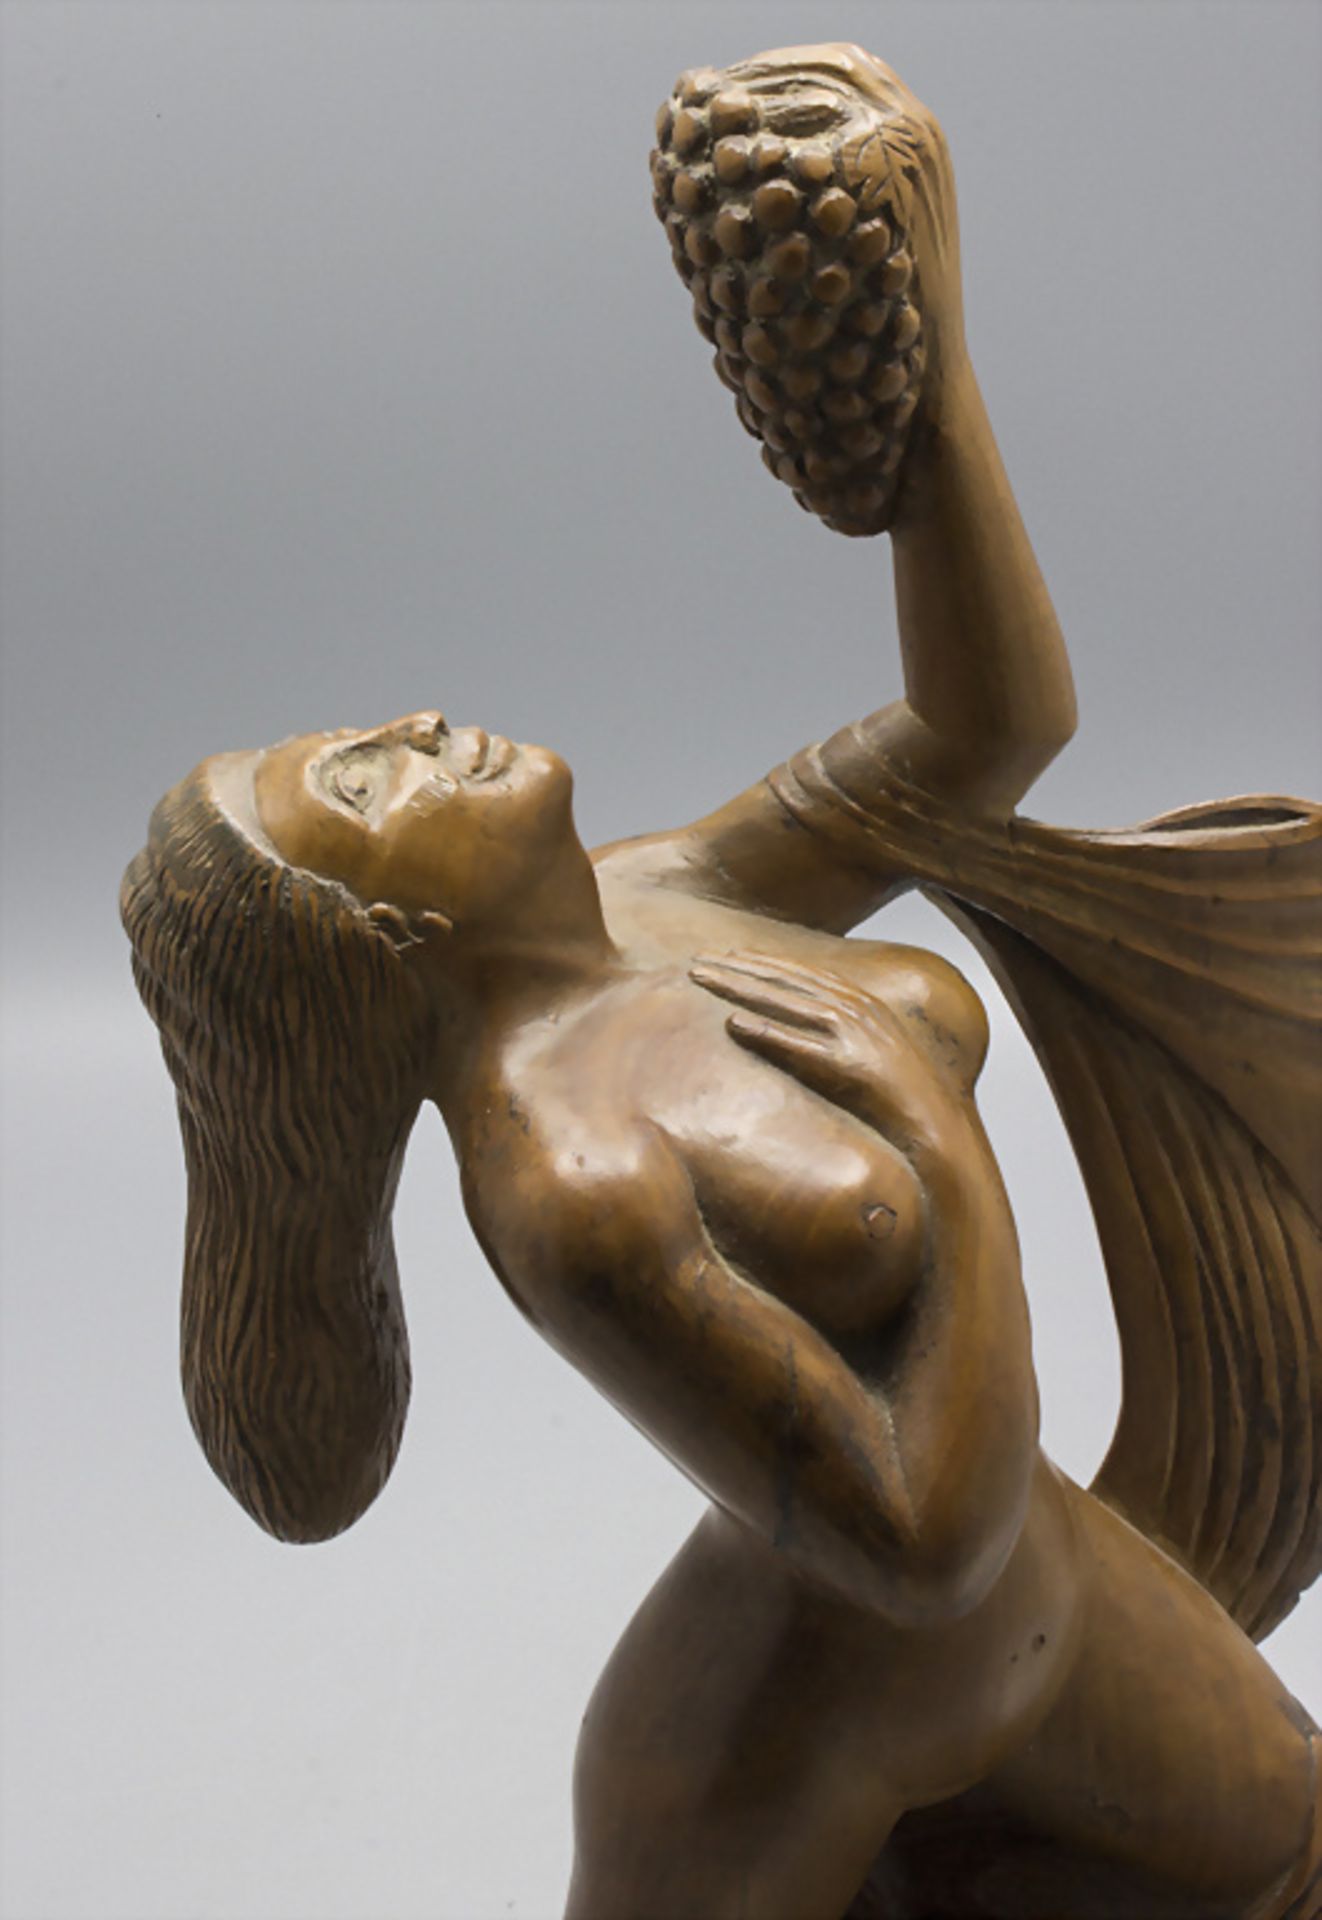 Holzskulptur 'weiblicher Akt mit Trauben' / A wooden scultpture of a female nude with grapes, ... - Image 4 of 5